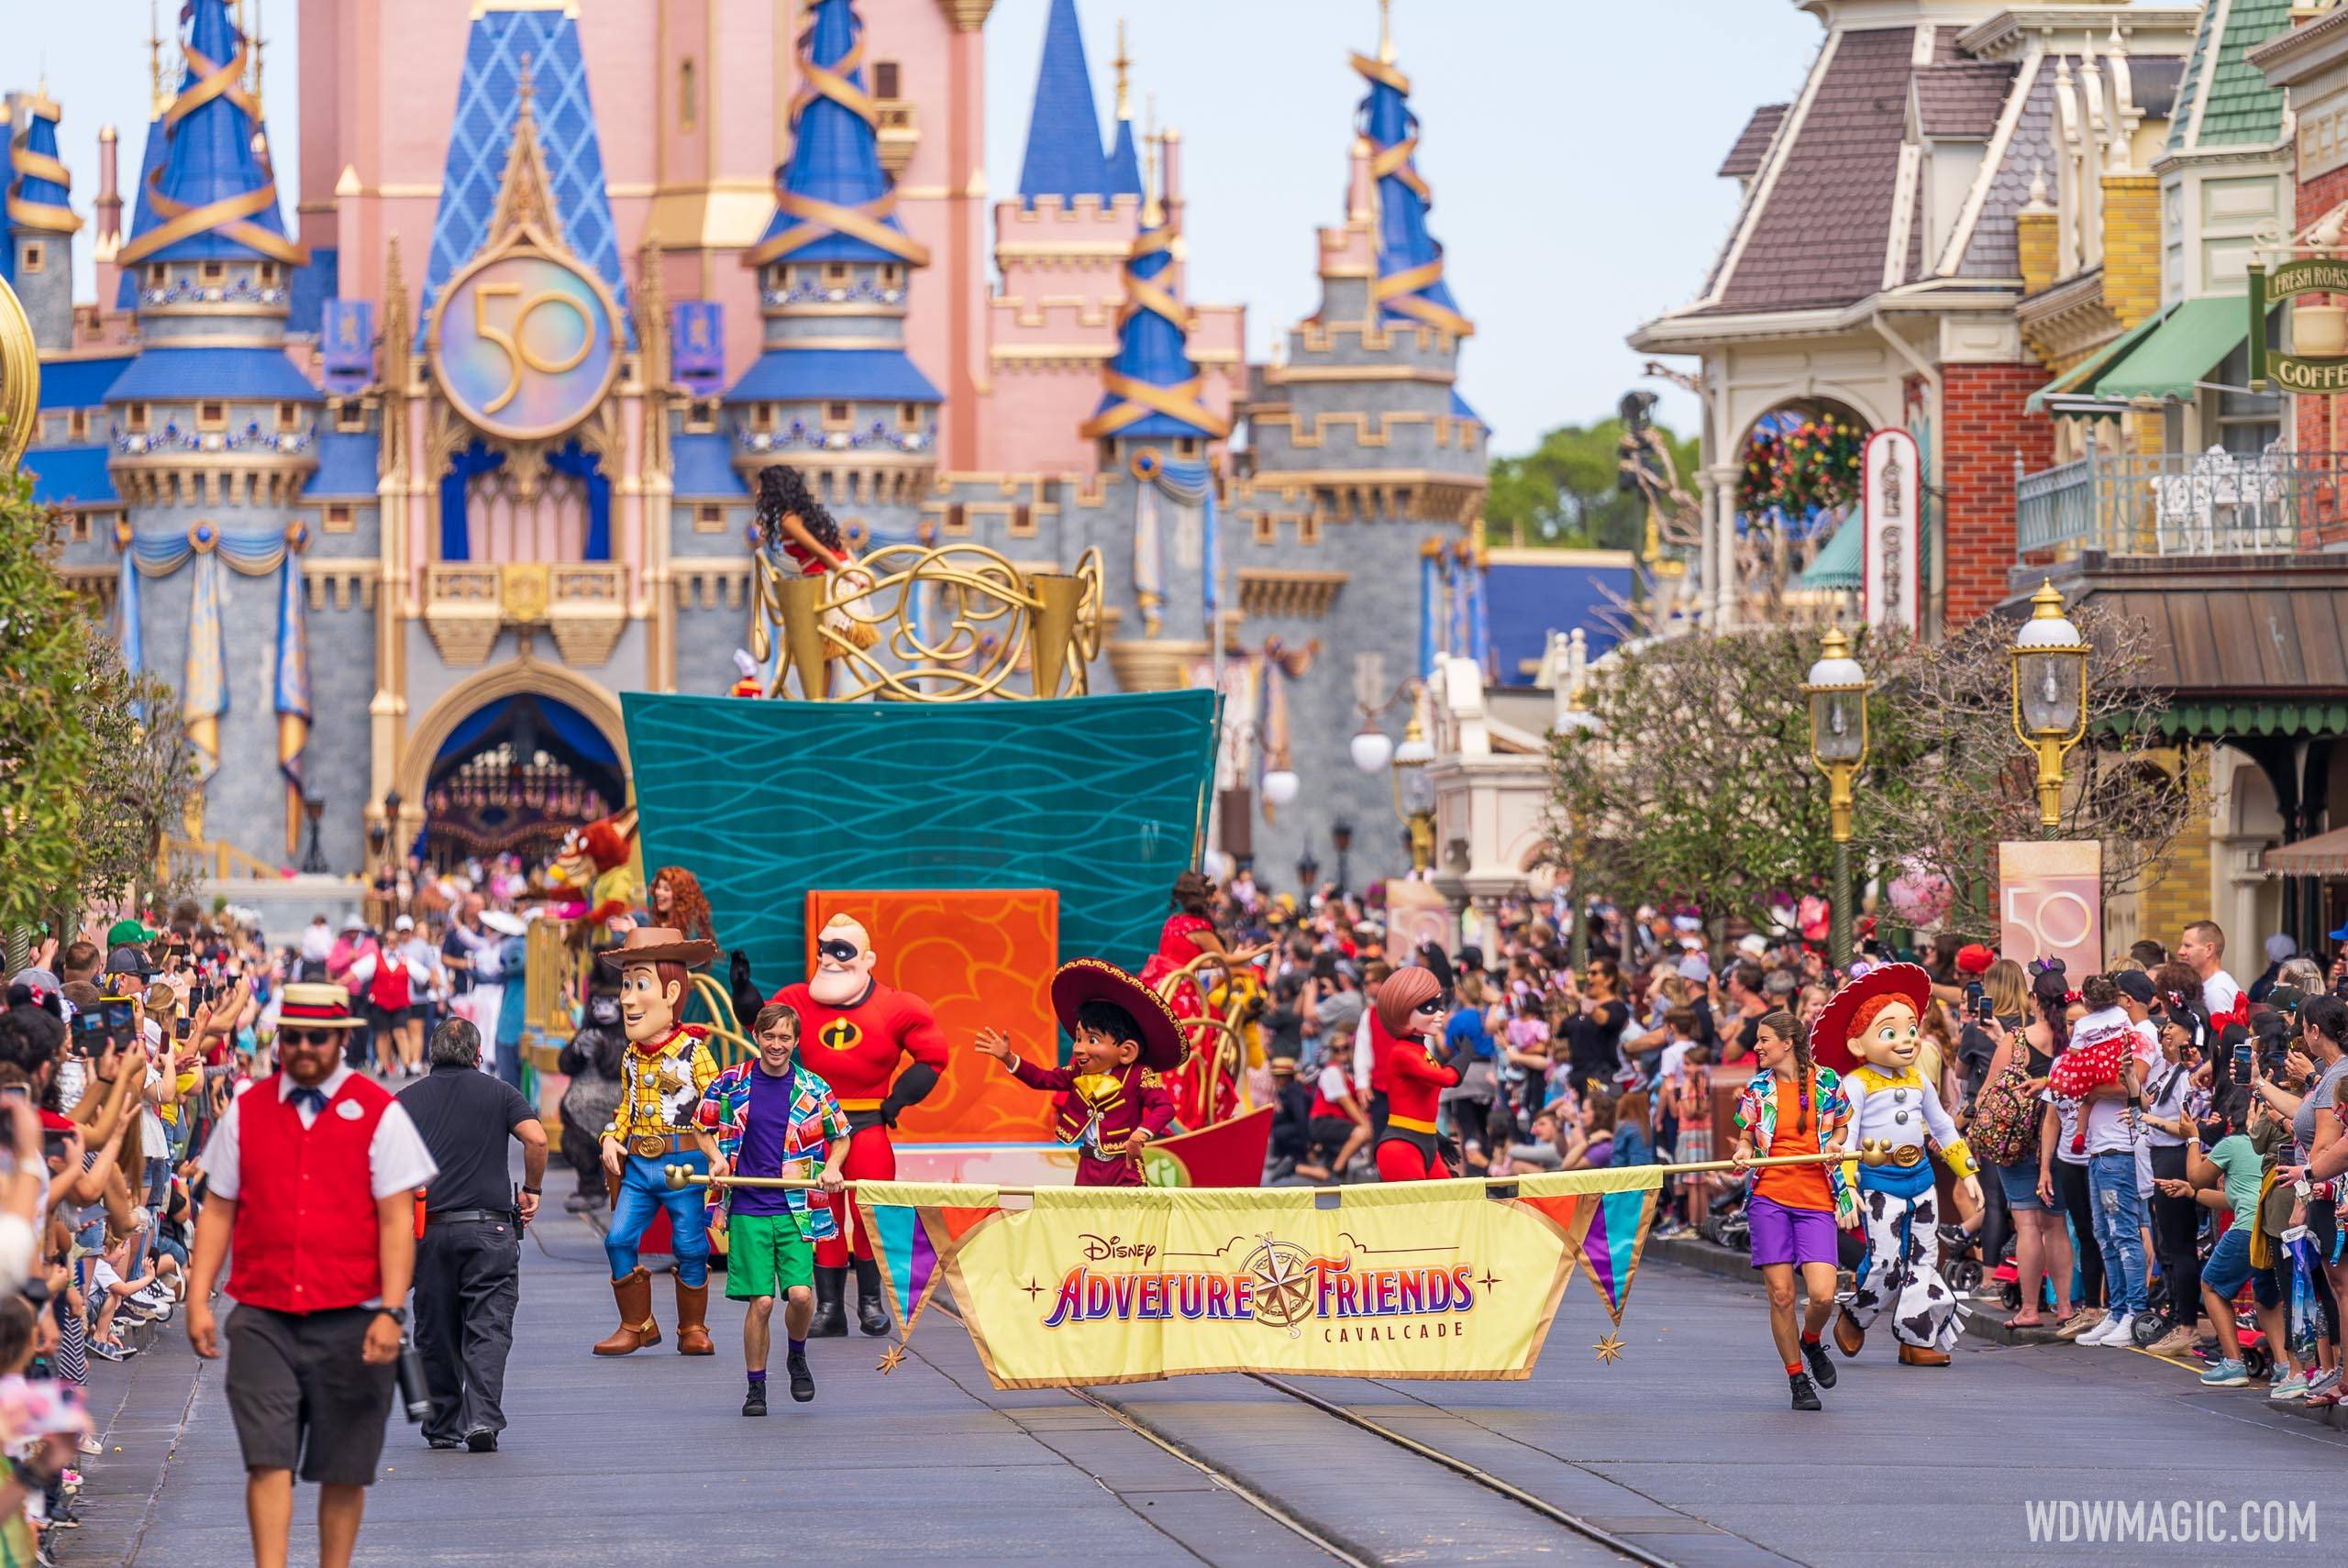 Disney Adventures Friends Cavalcade debuts at Magic Kingdom in February 2022